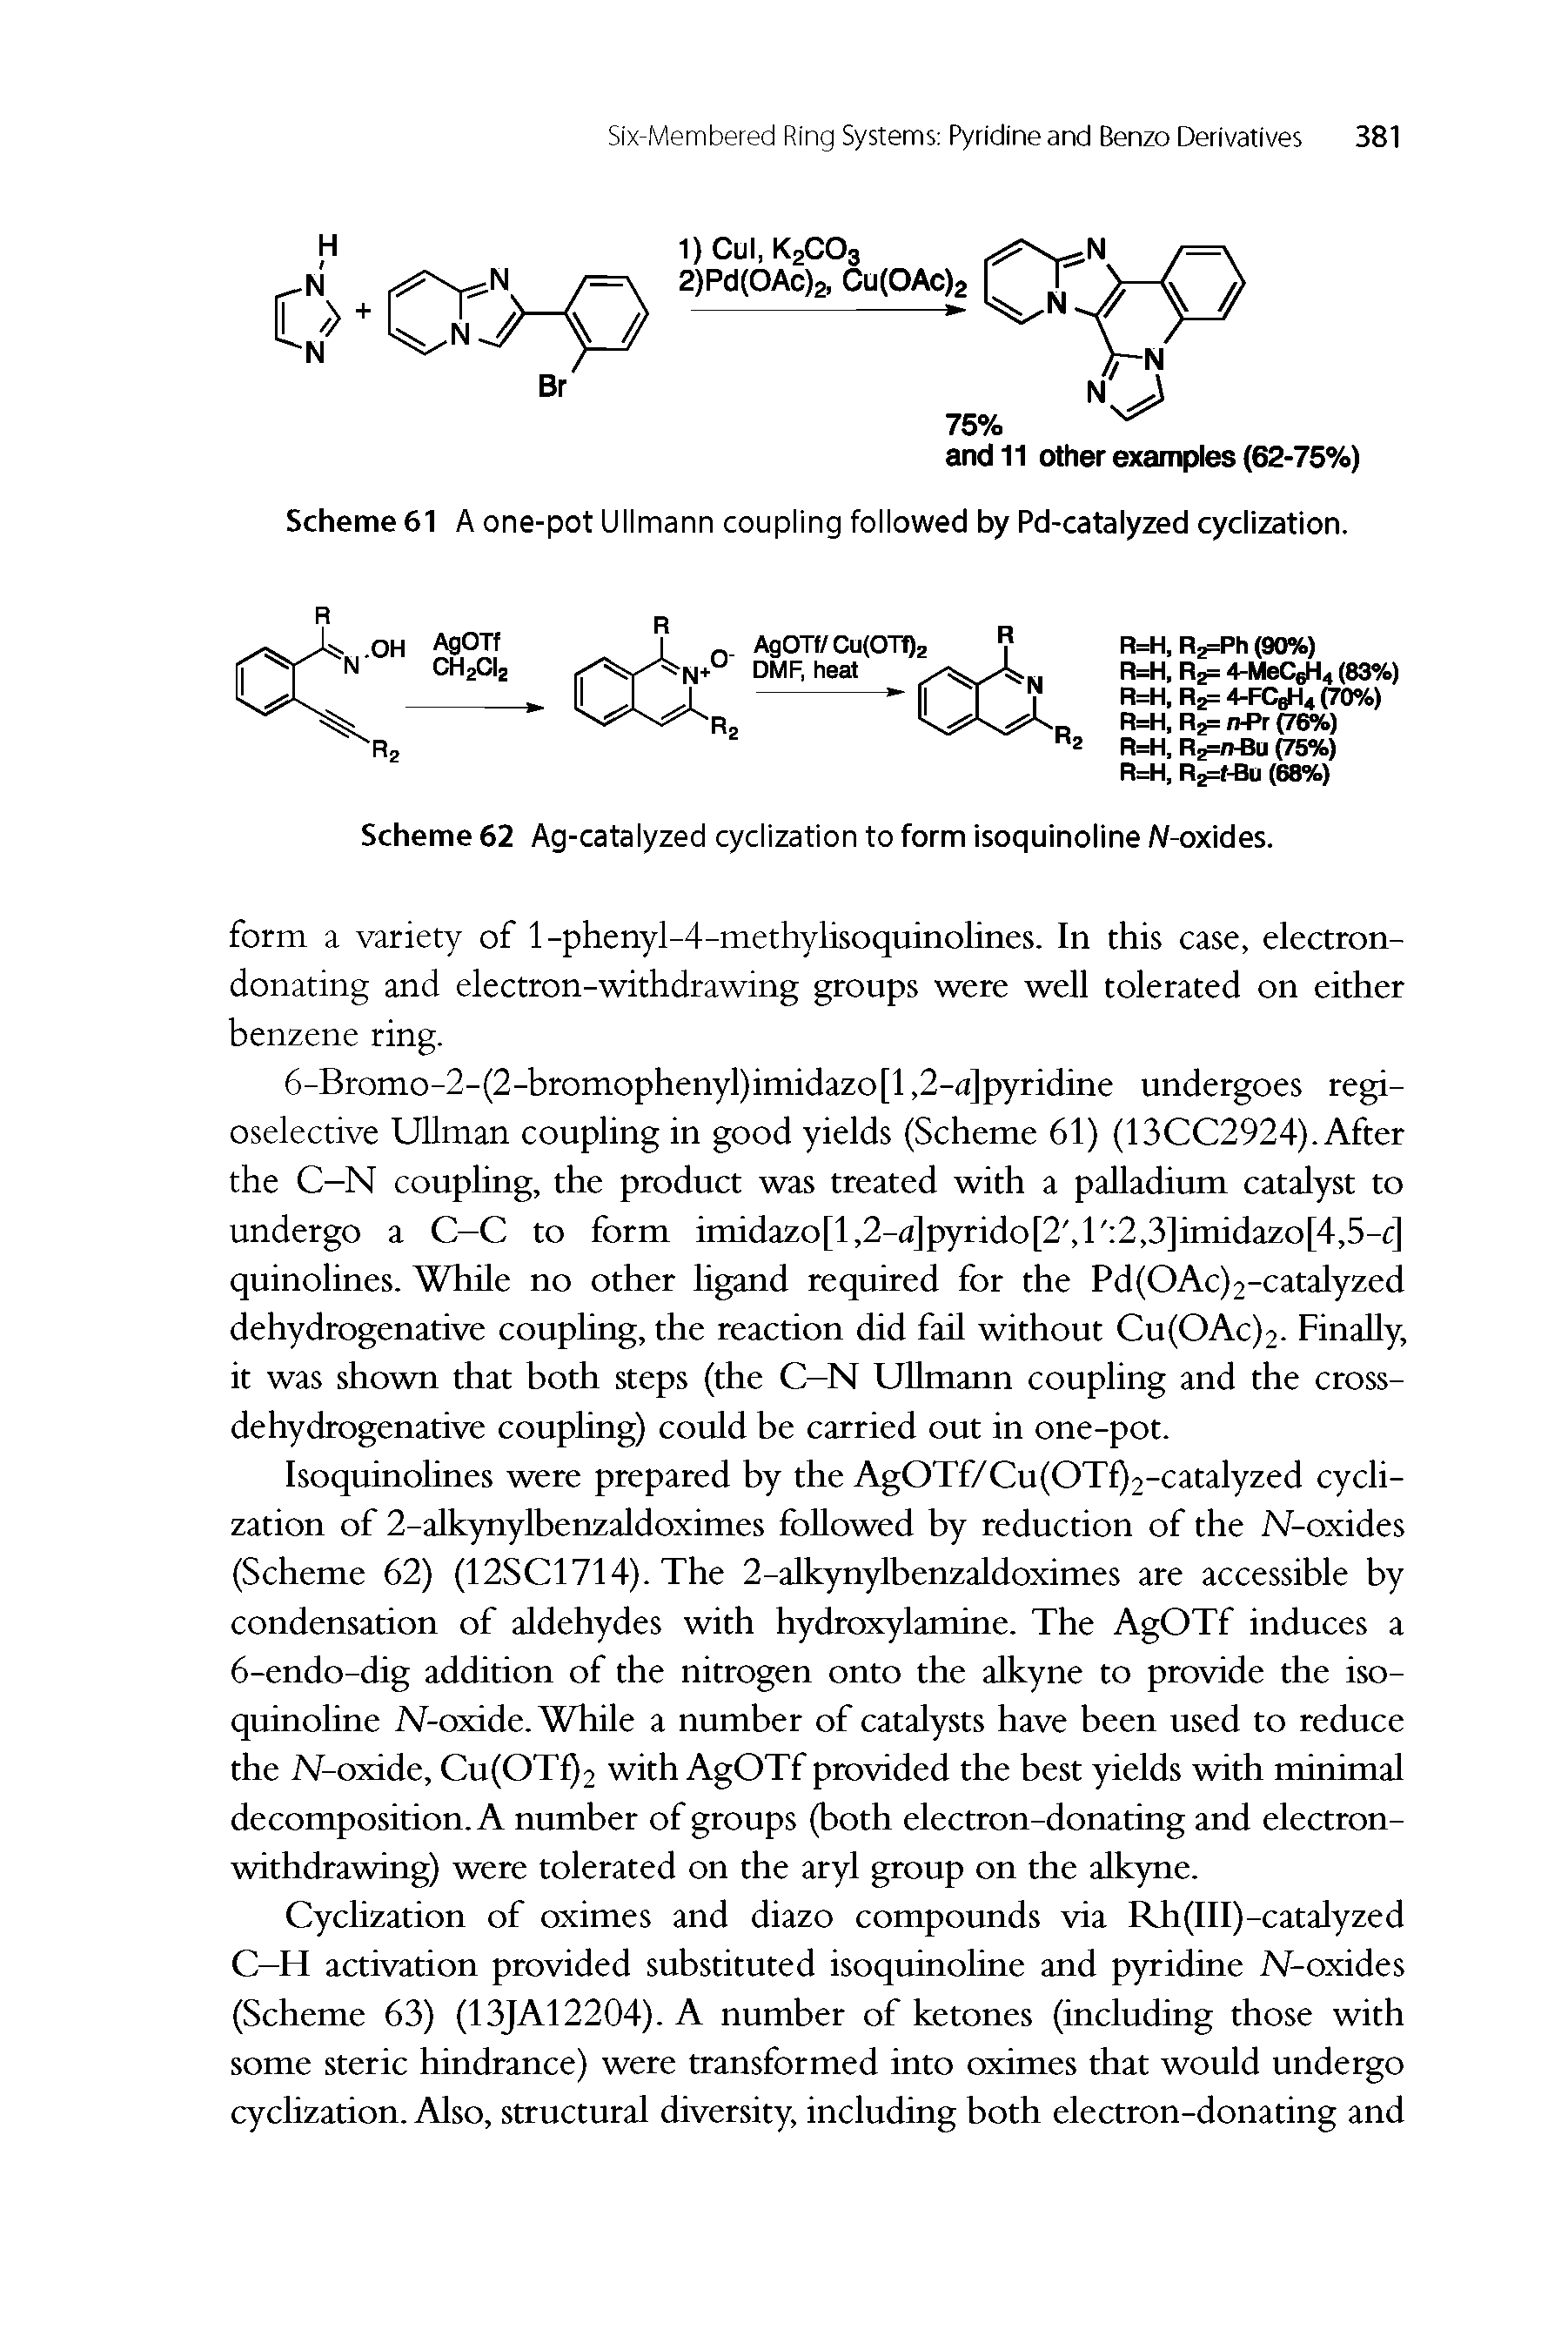 Scheme 62 Ag-catalyzed cyclization to form isoquinoline A/-oxides.